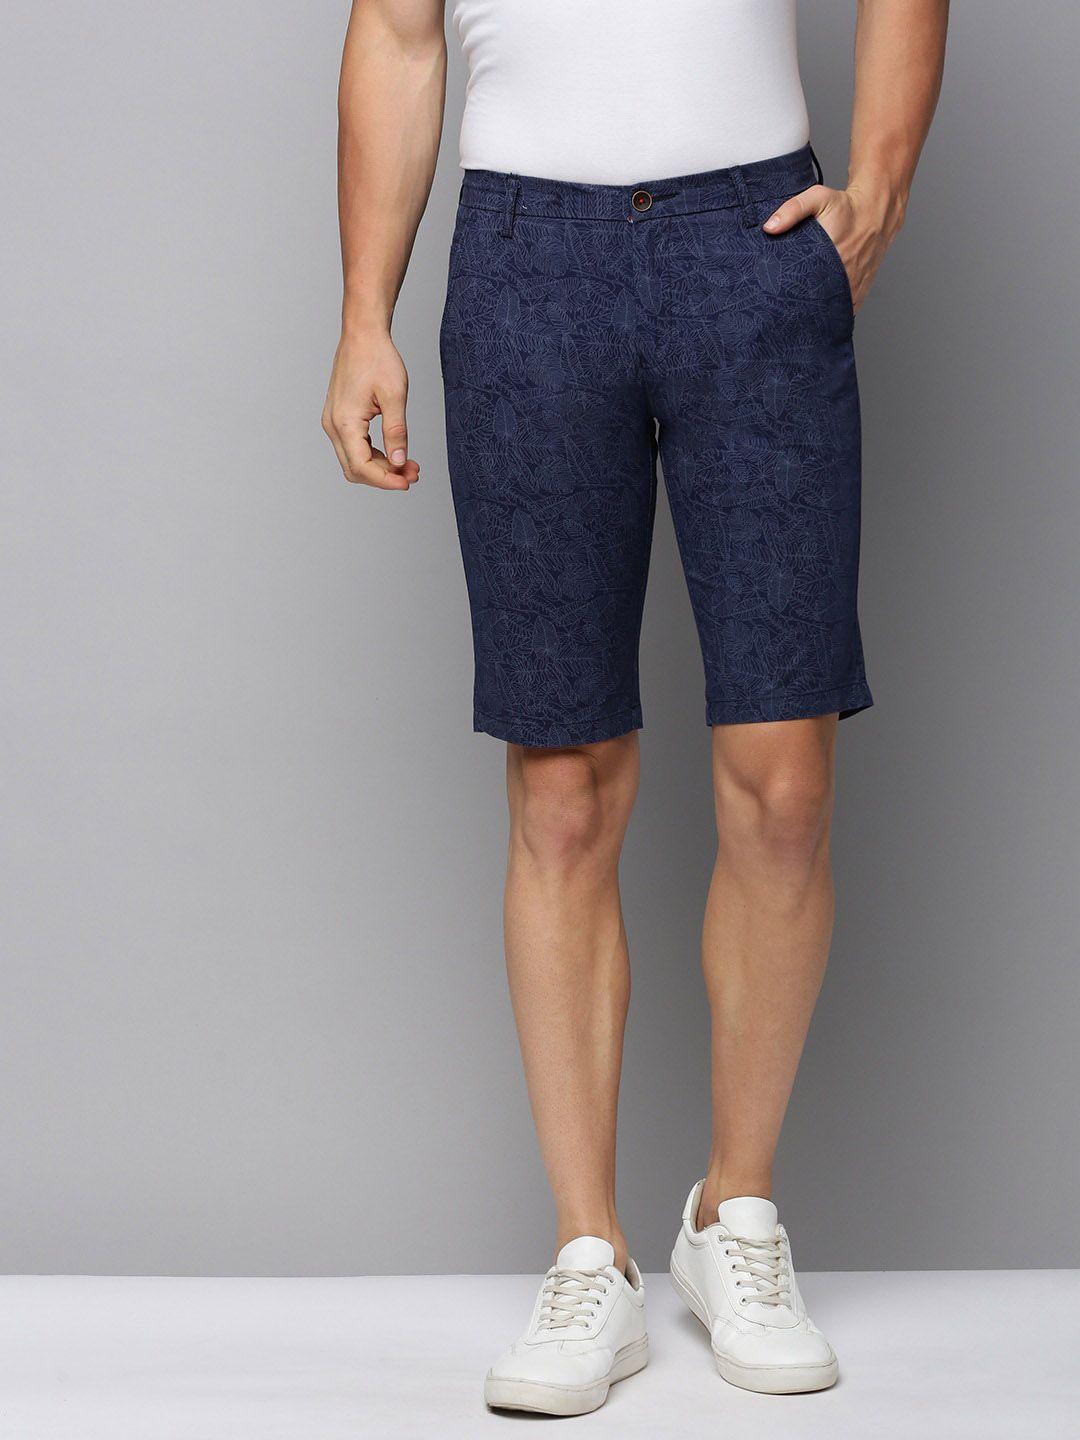 showoff-men-abstract-printed-cotton-mid-rise-chinos-shorts